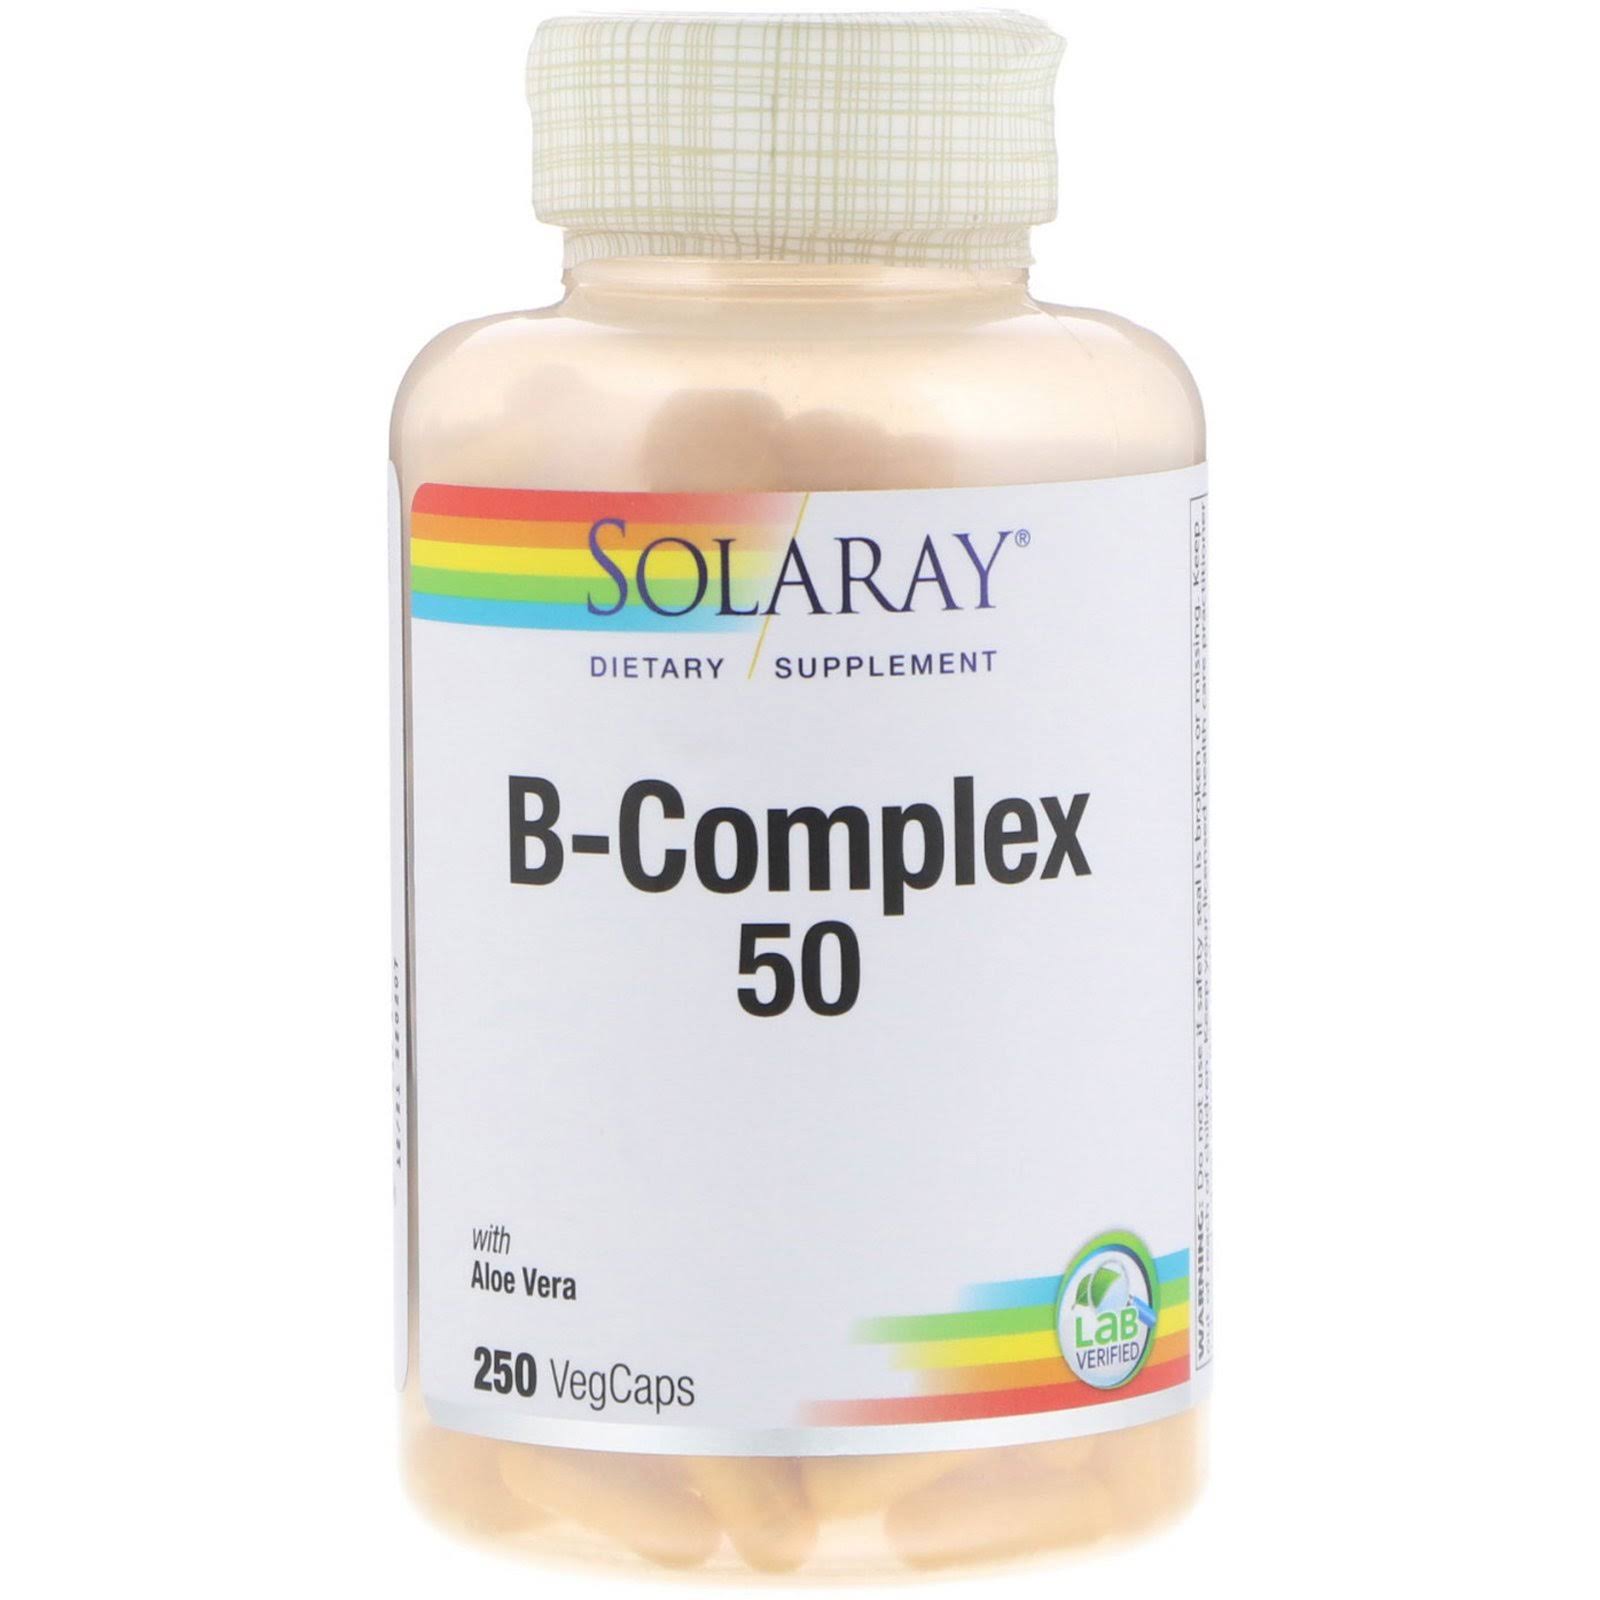 Solaray B-Complex 50 Dietary Supplement - 250 Capsules